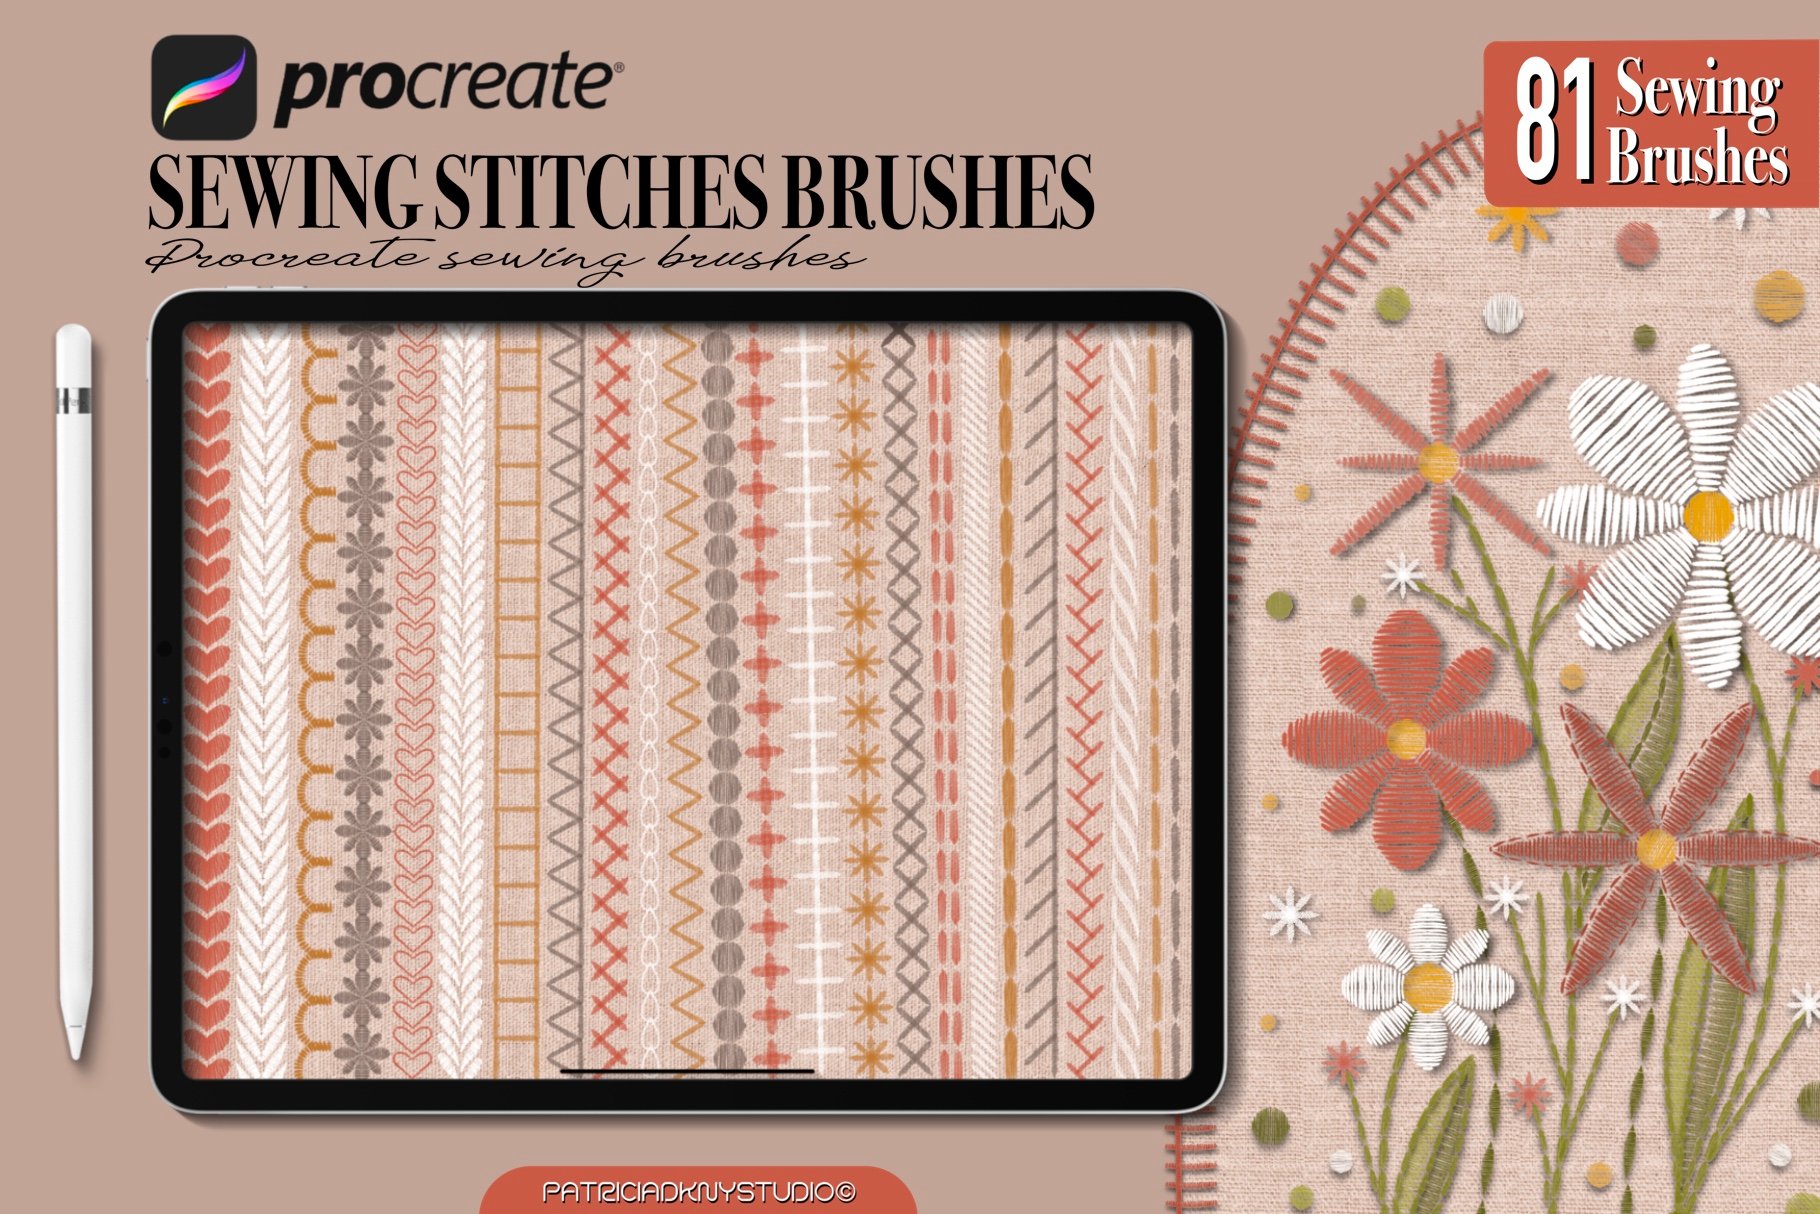 procreate sewing brushes free